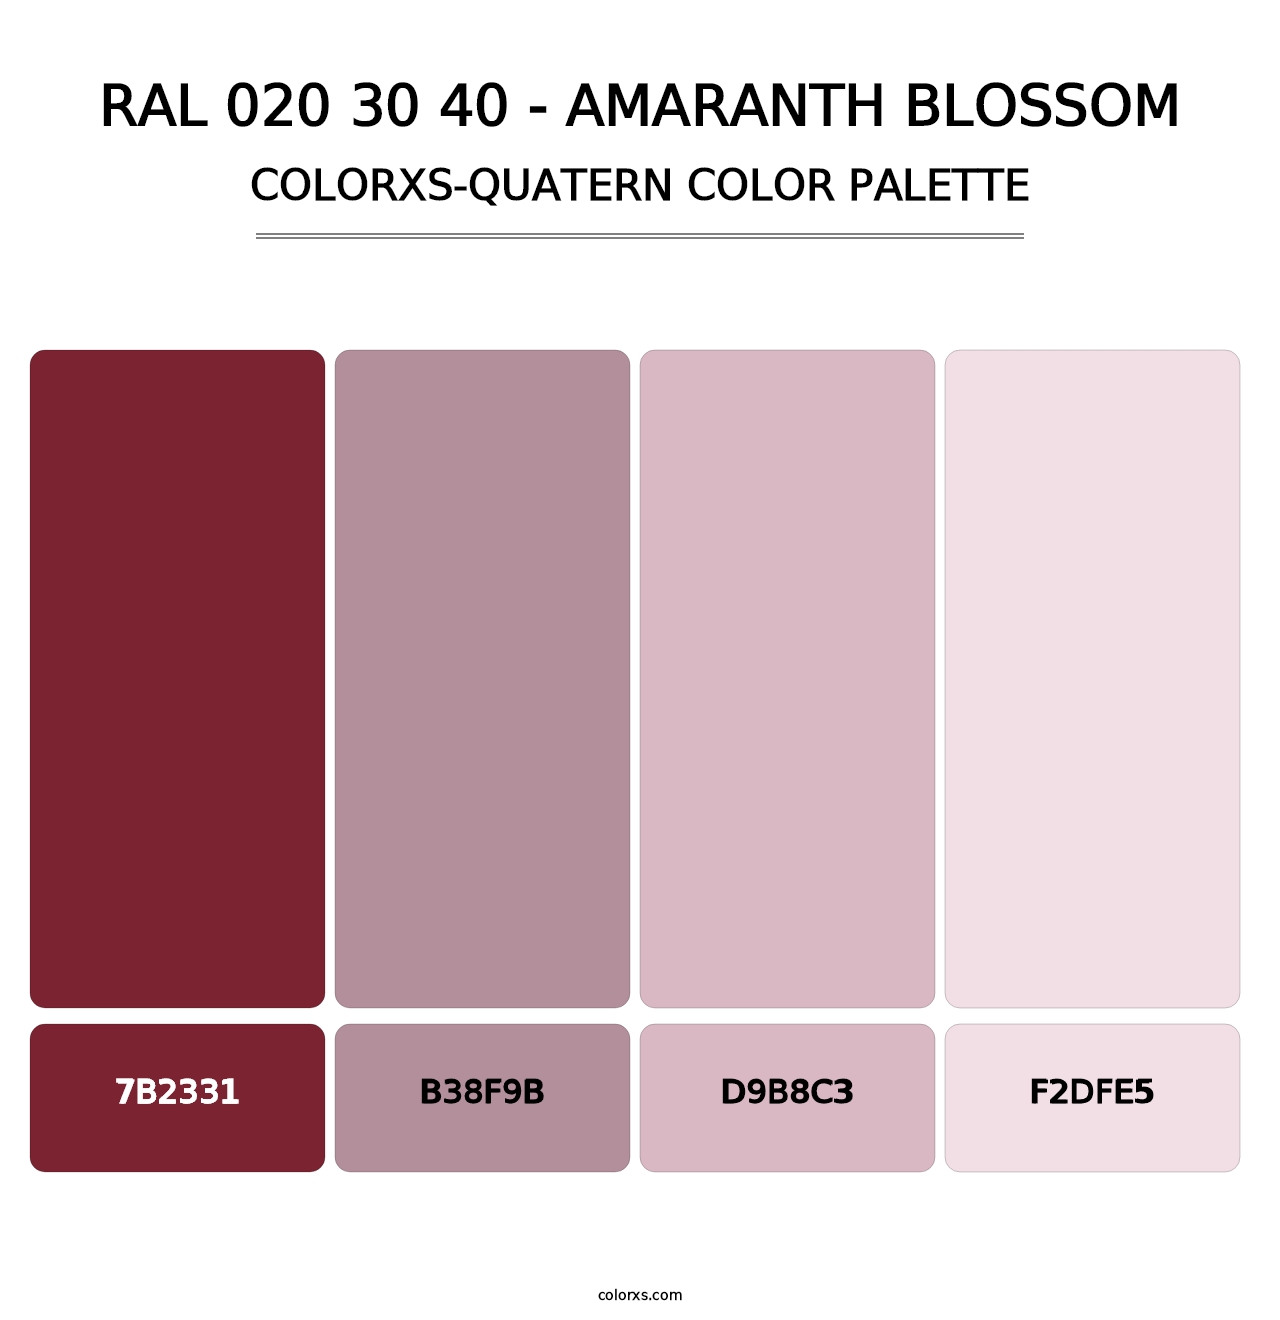 RAL 020 30 40 - Amaranth Blossom - Colorxs Quatern Palette